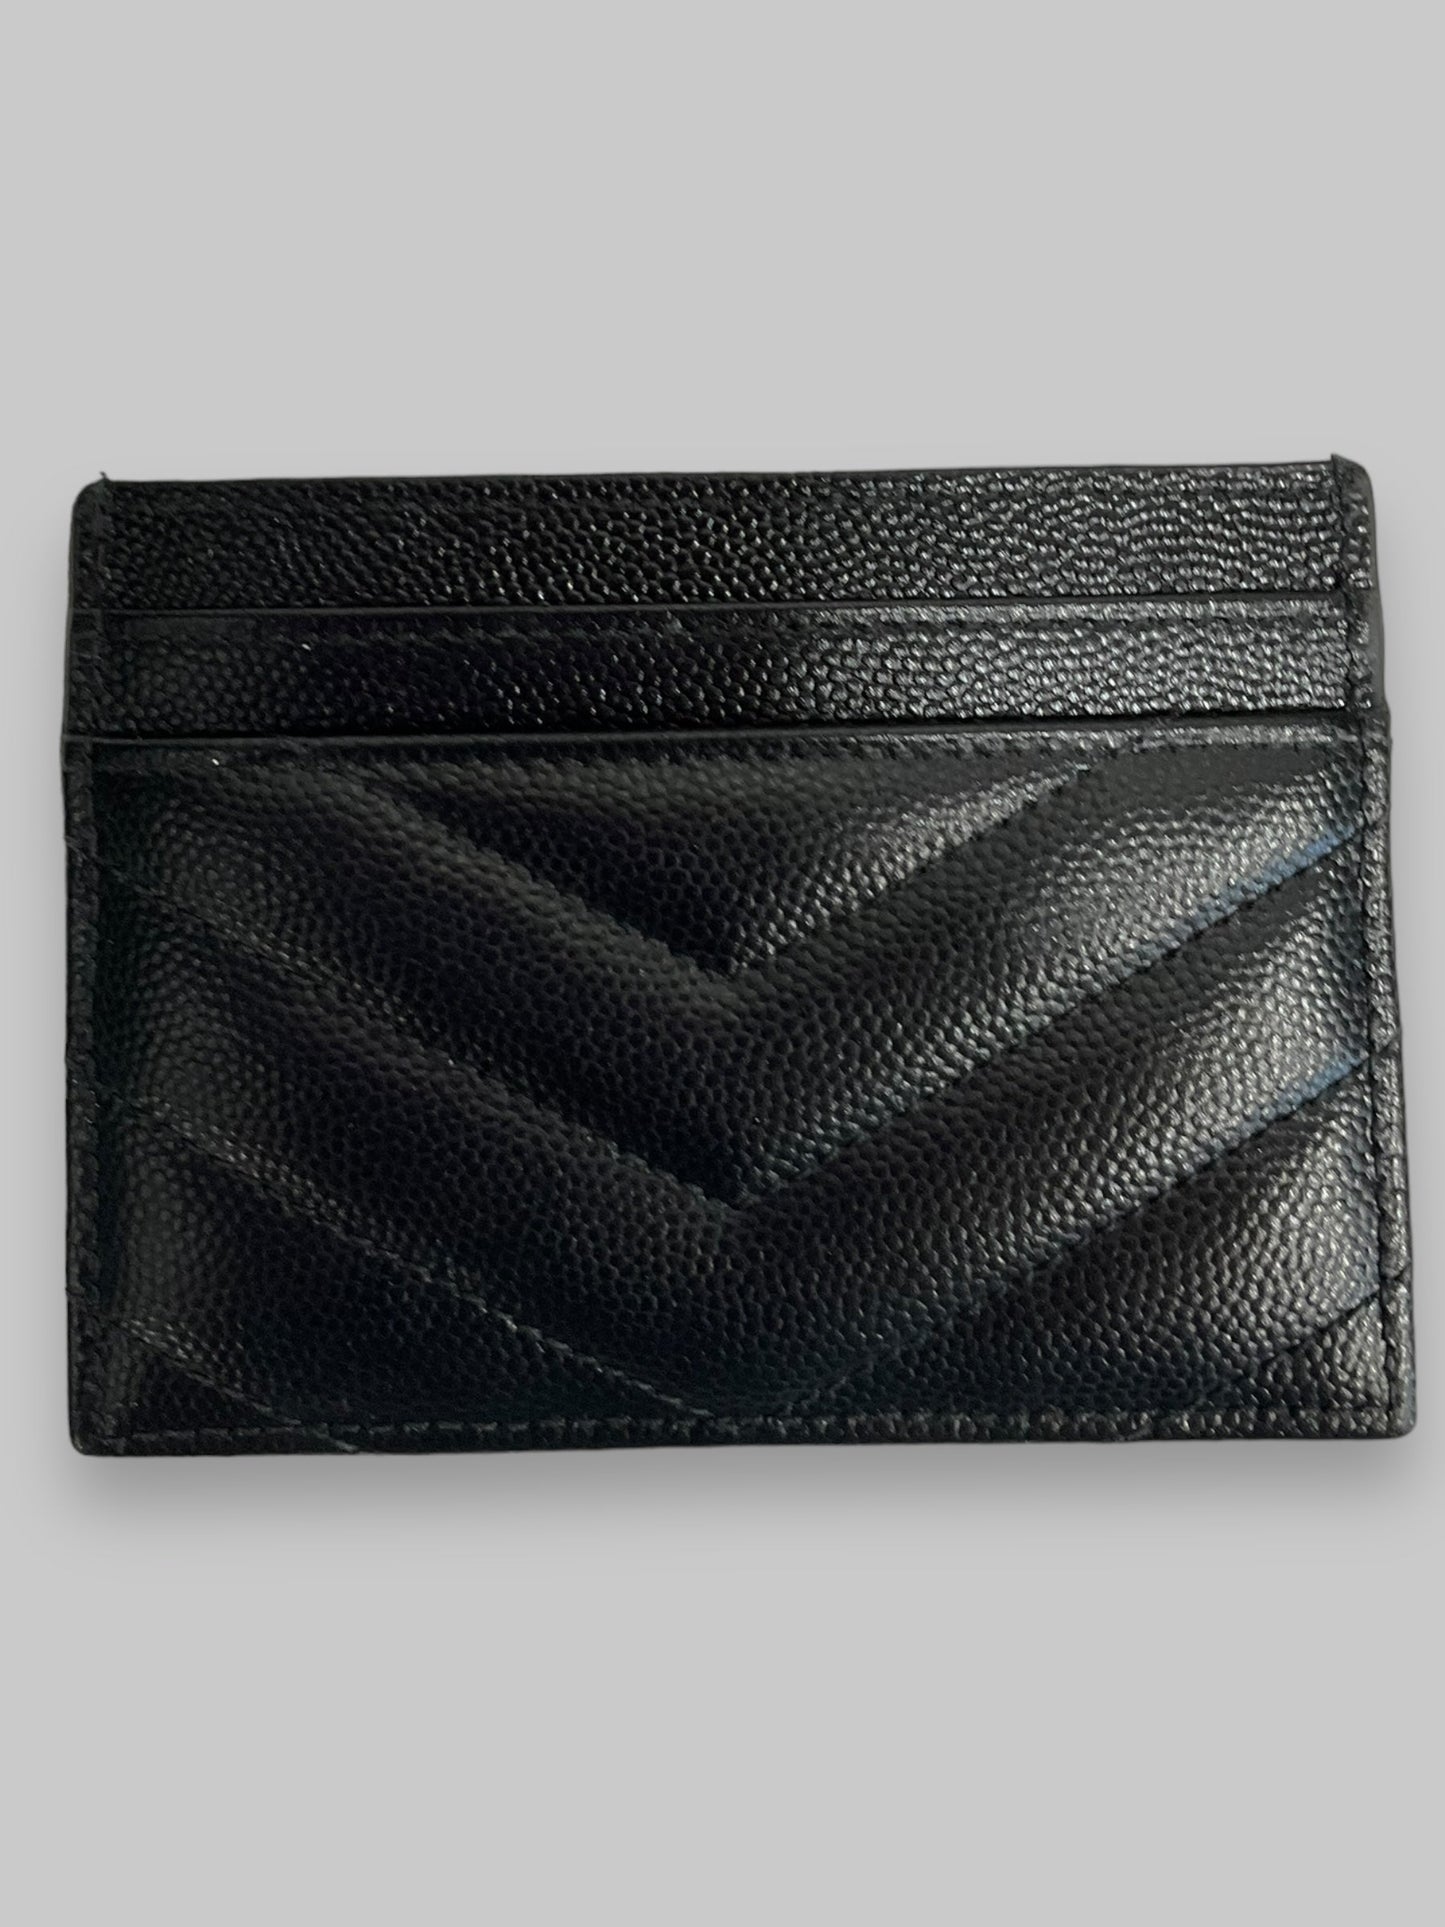 Wallet Luxury Designer Yves Saint Laurent, Size Small